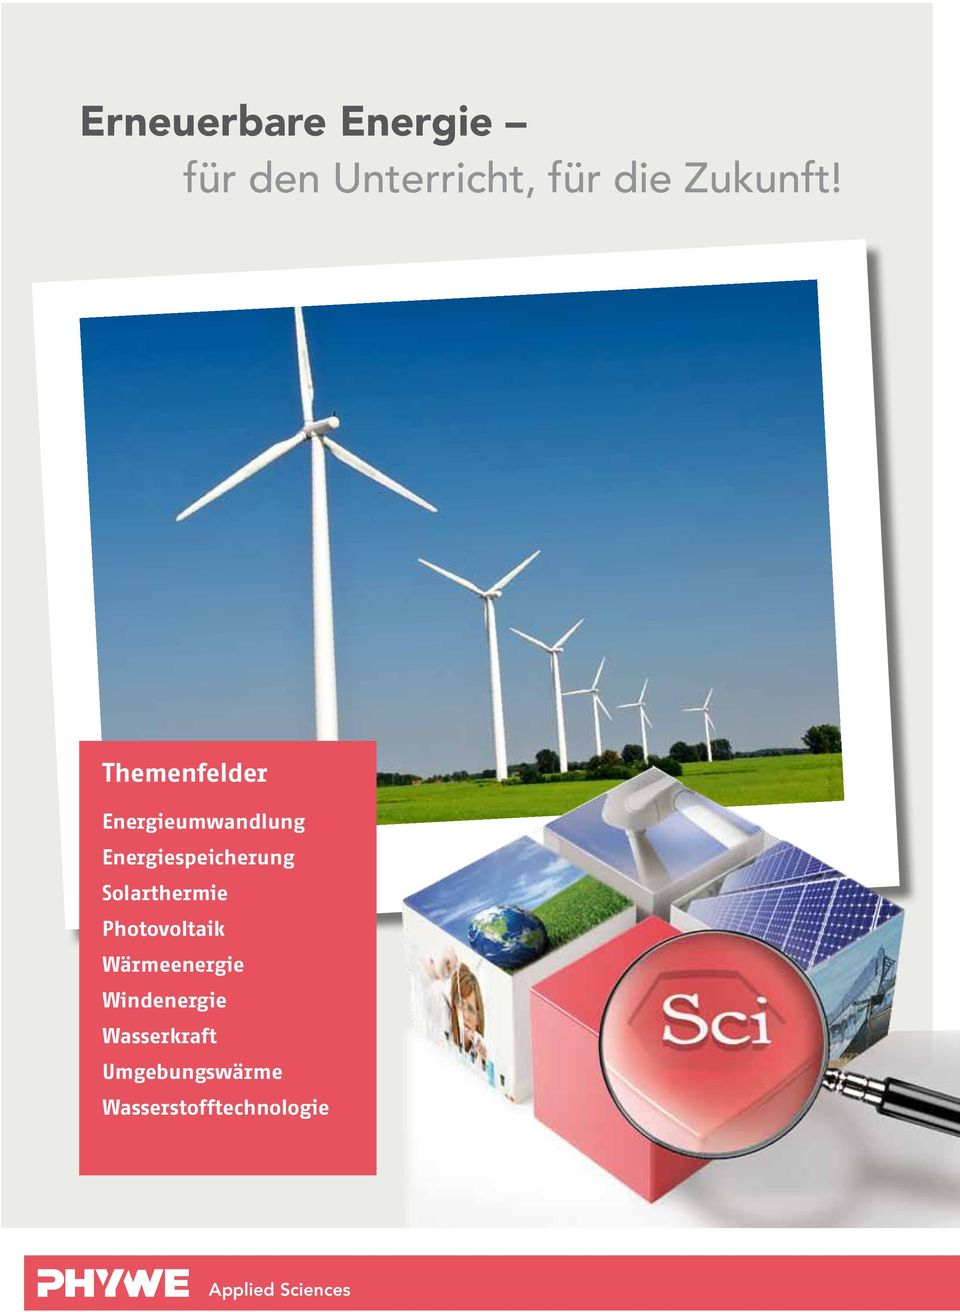 Solarthermie Photovoltaik Wärmeenergie Windenergie